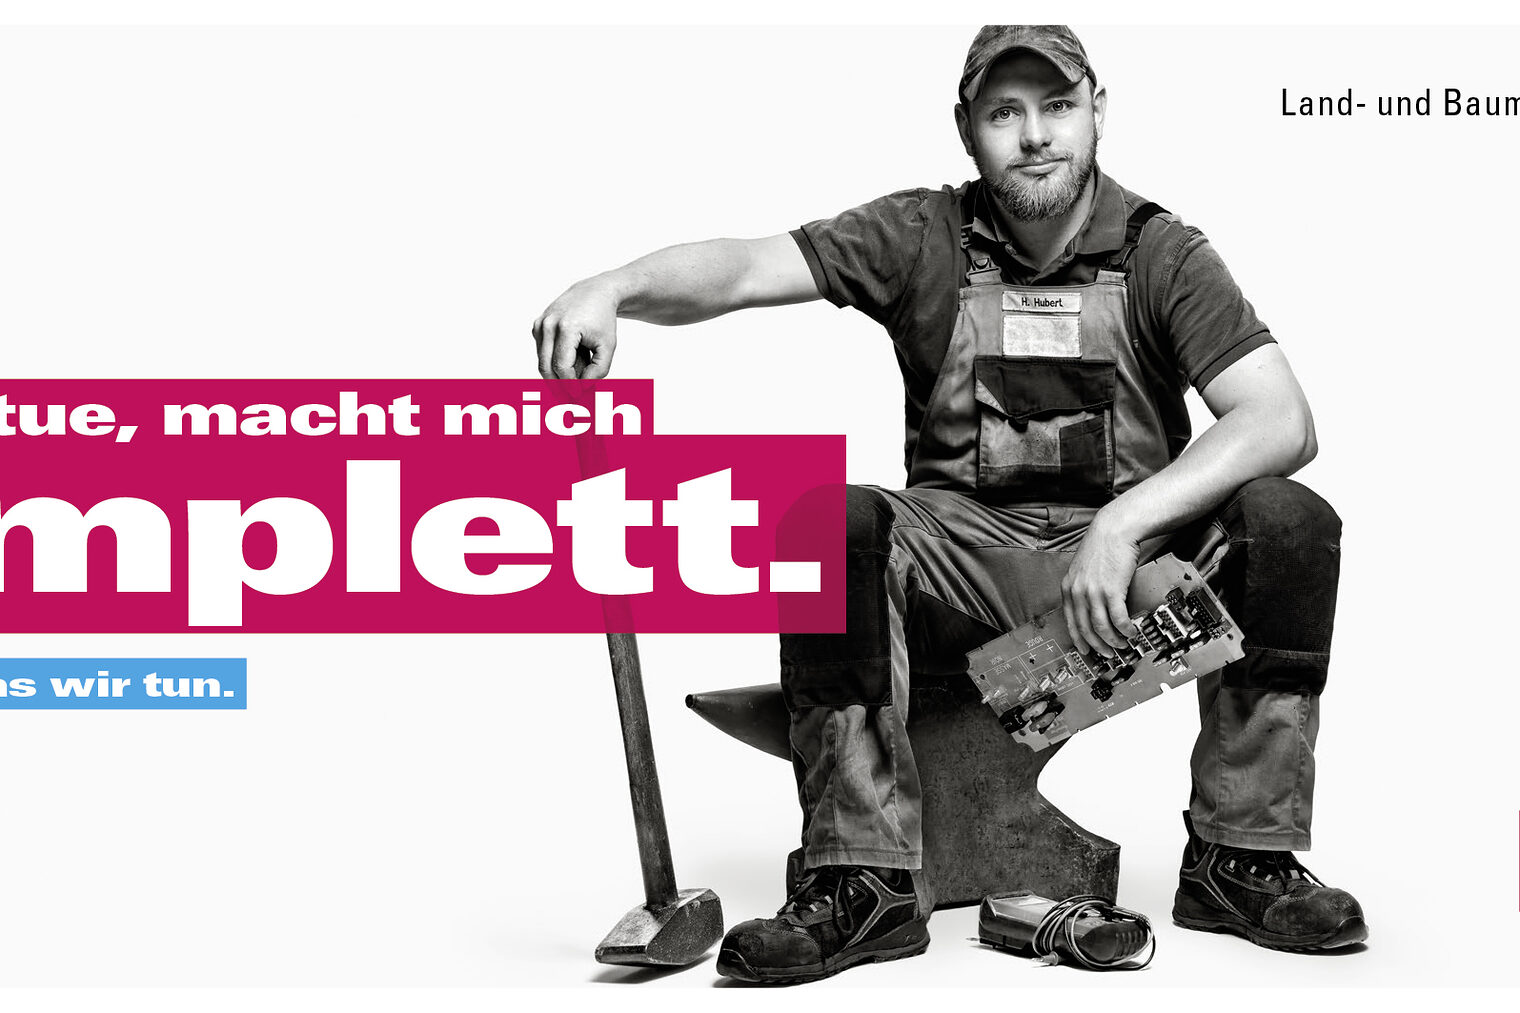 Land- und Baumaschinenmechatroniker Hauke Hubert ist Kampagenbotschafter der Imagekampagne